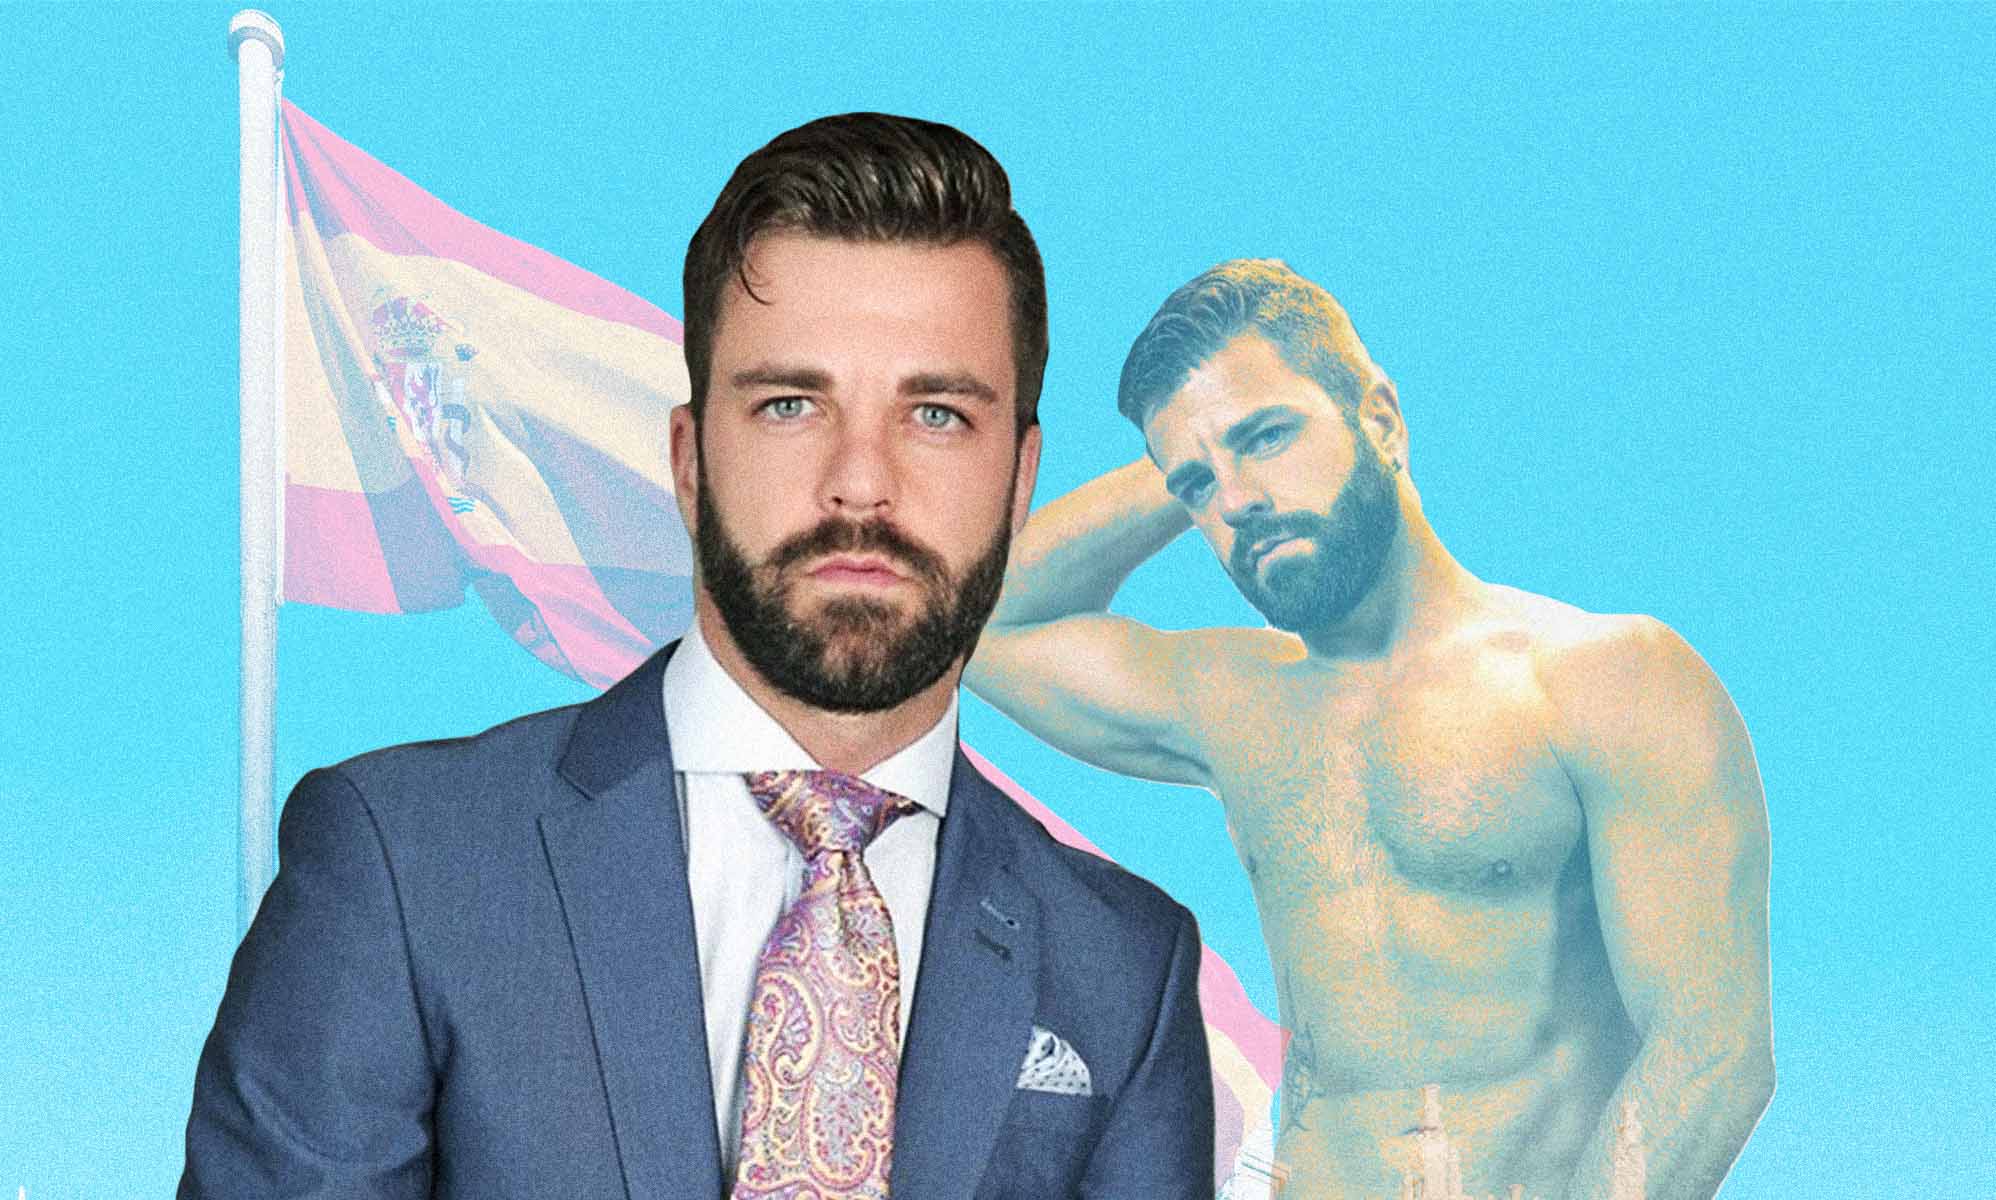 Real Little Porn - Ex-gay porn star Antonio Moreno runs for mayor of small Spanish town